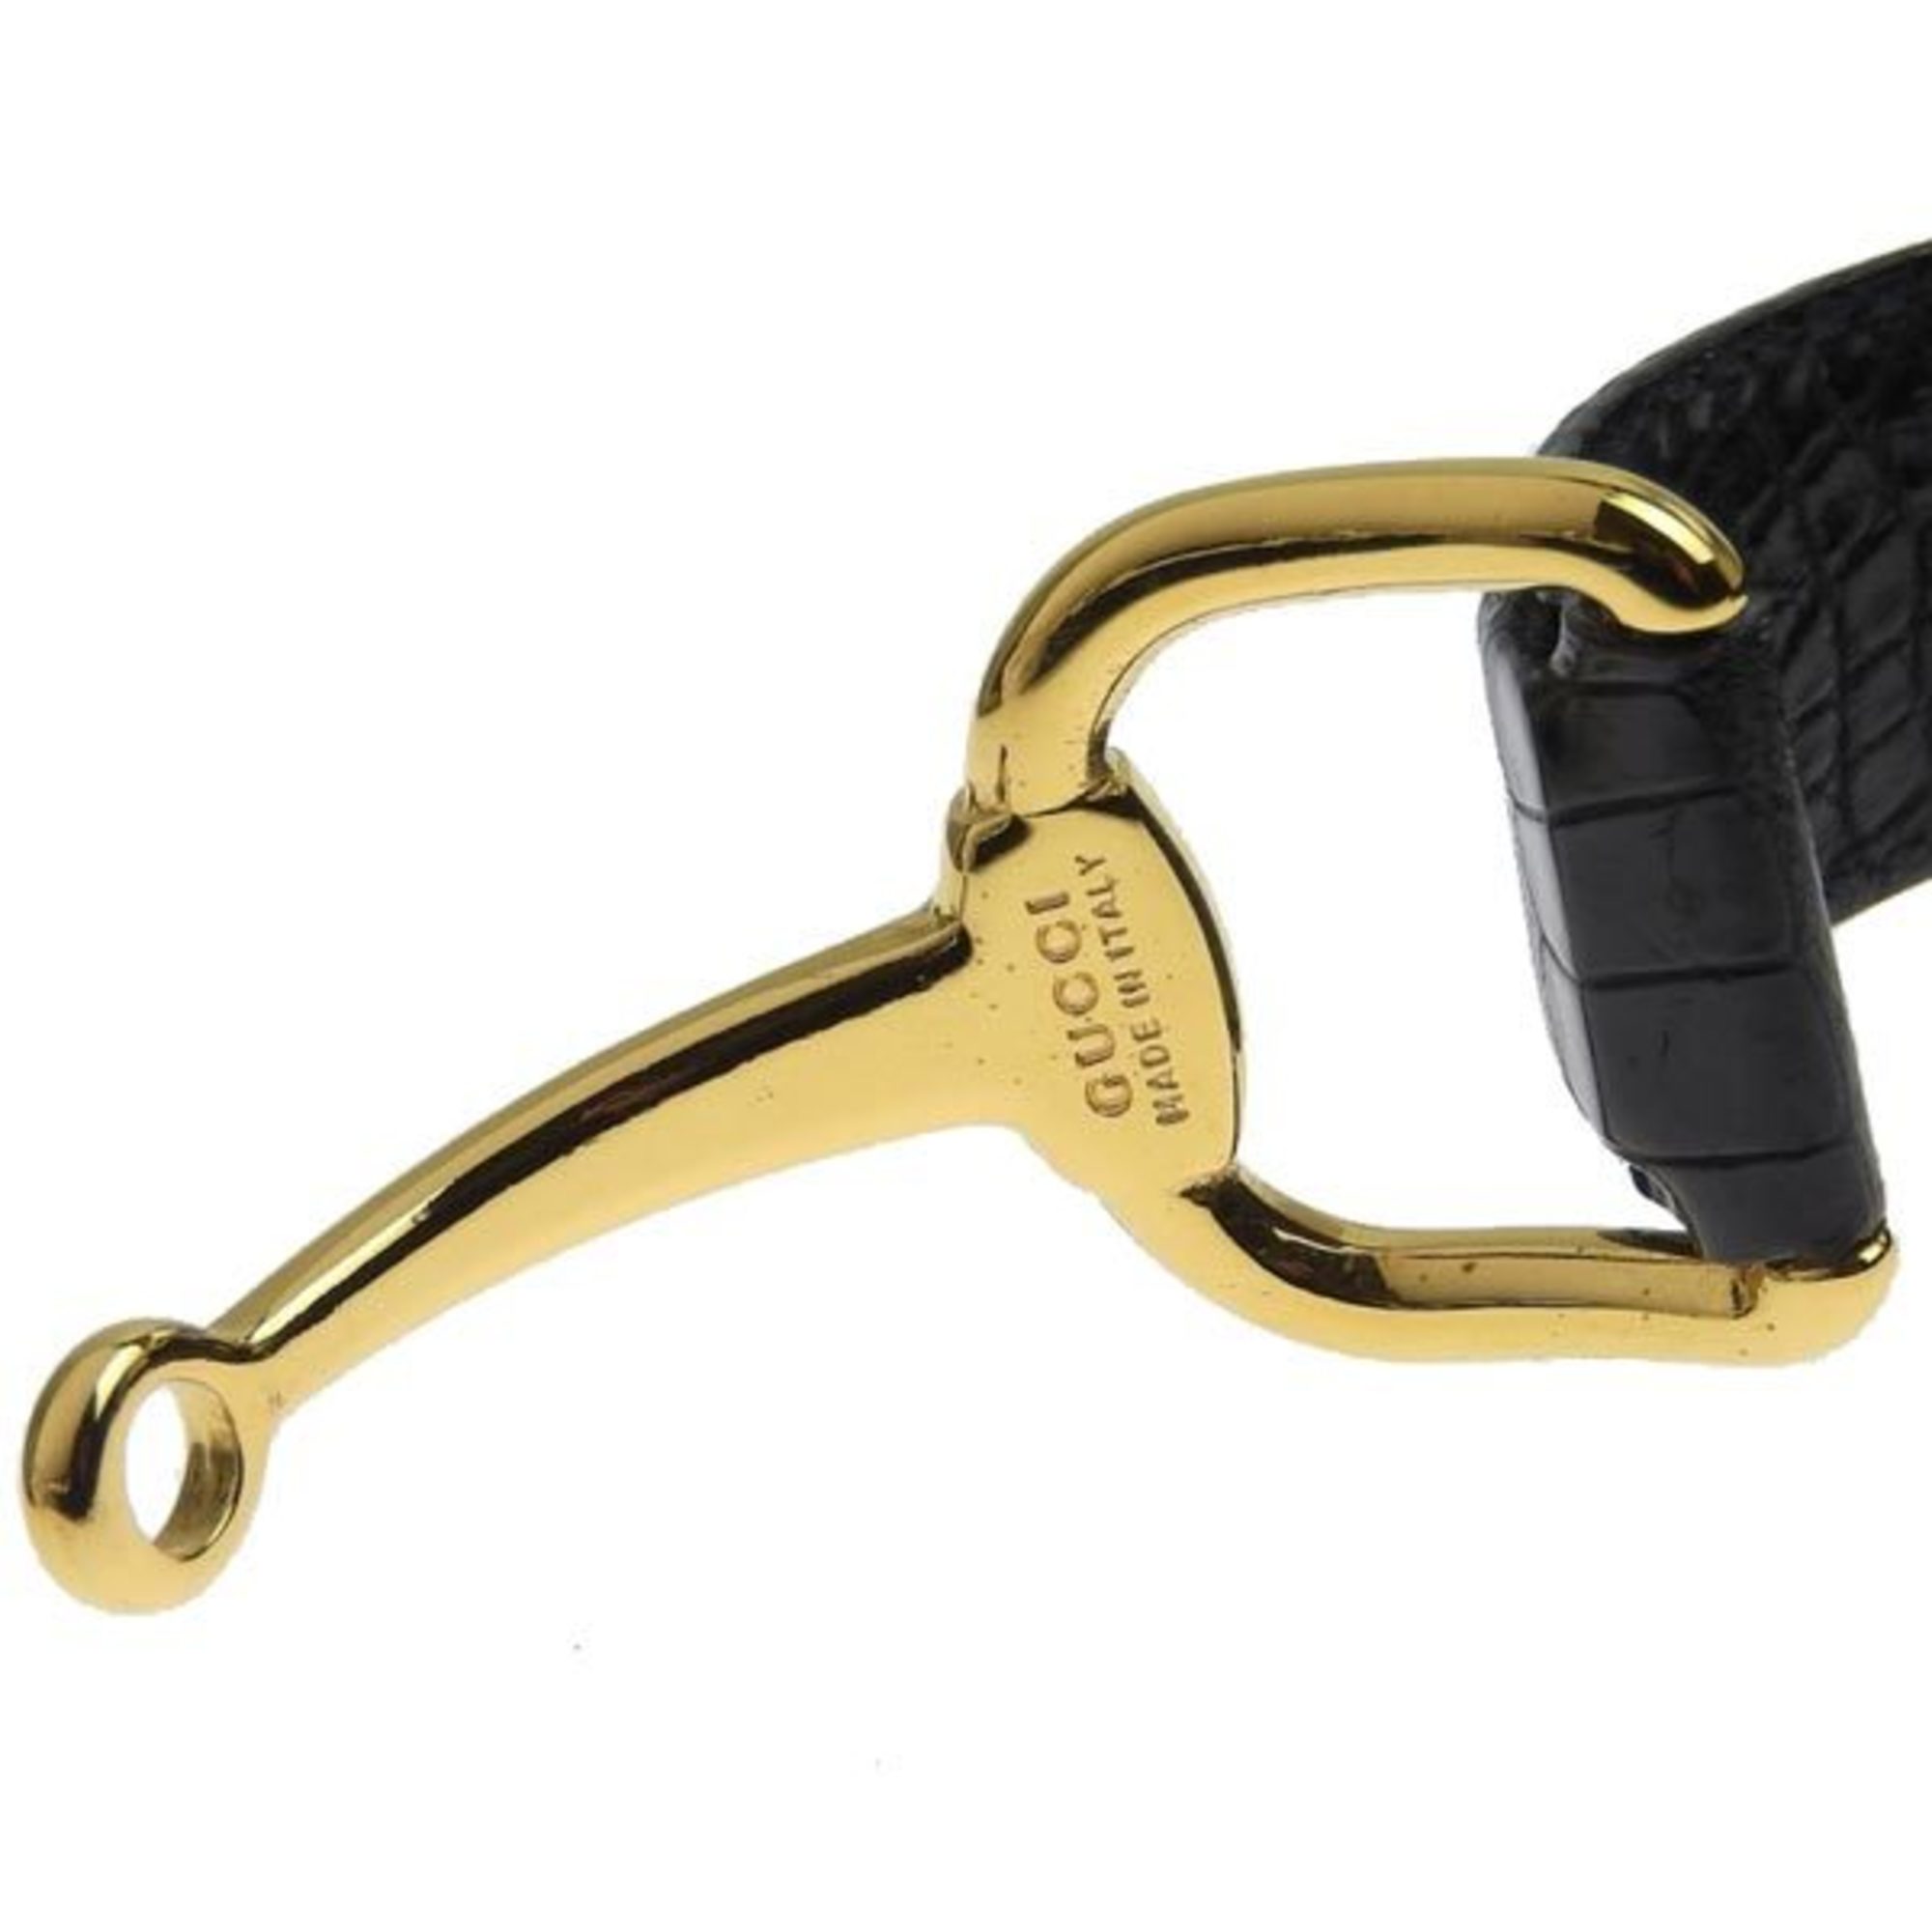 GUCCI Gucci Horsebit Leather Bangle Bracelet Black x Gold